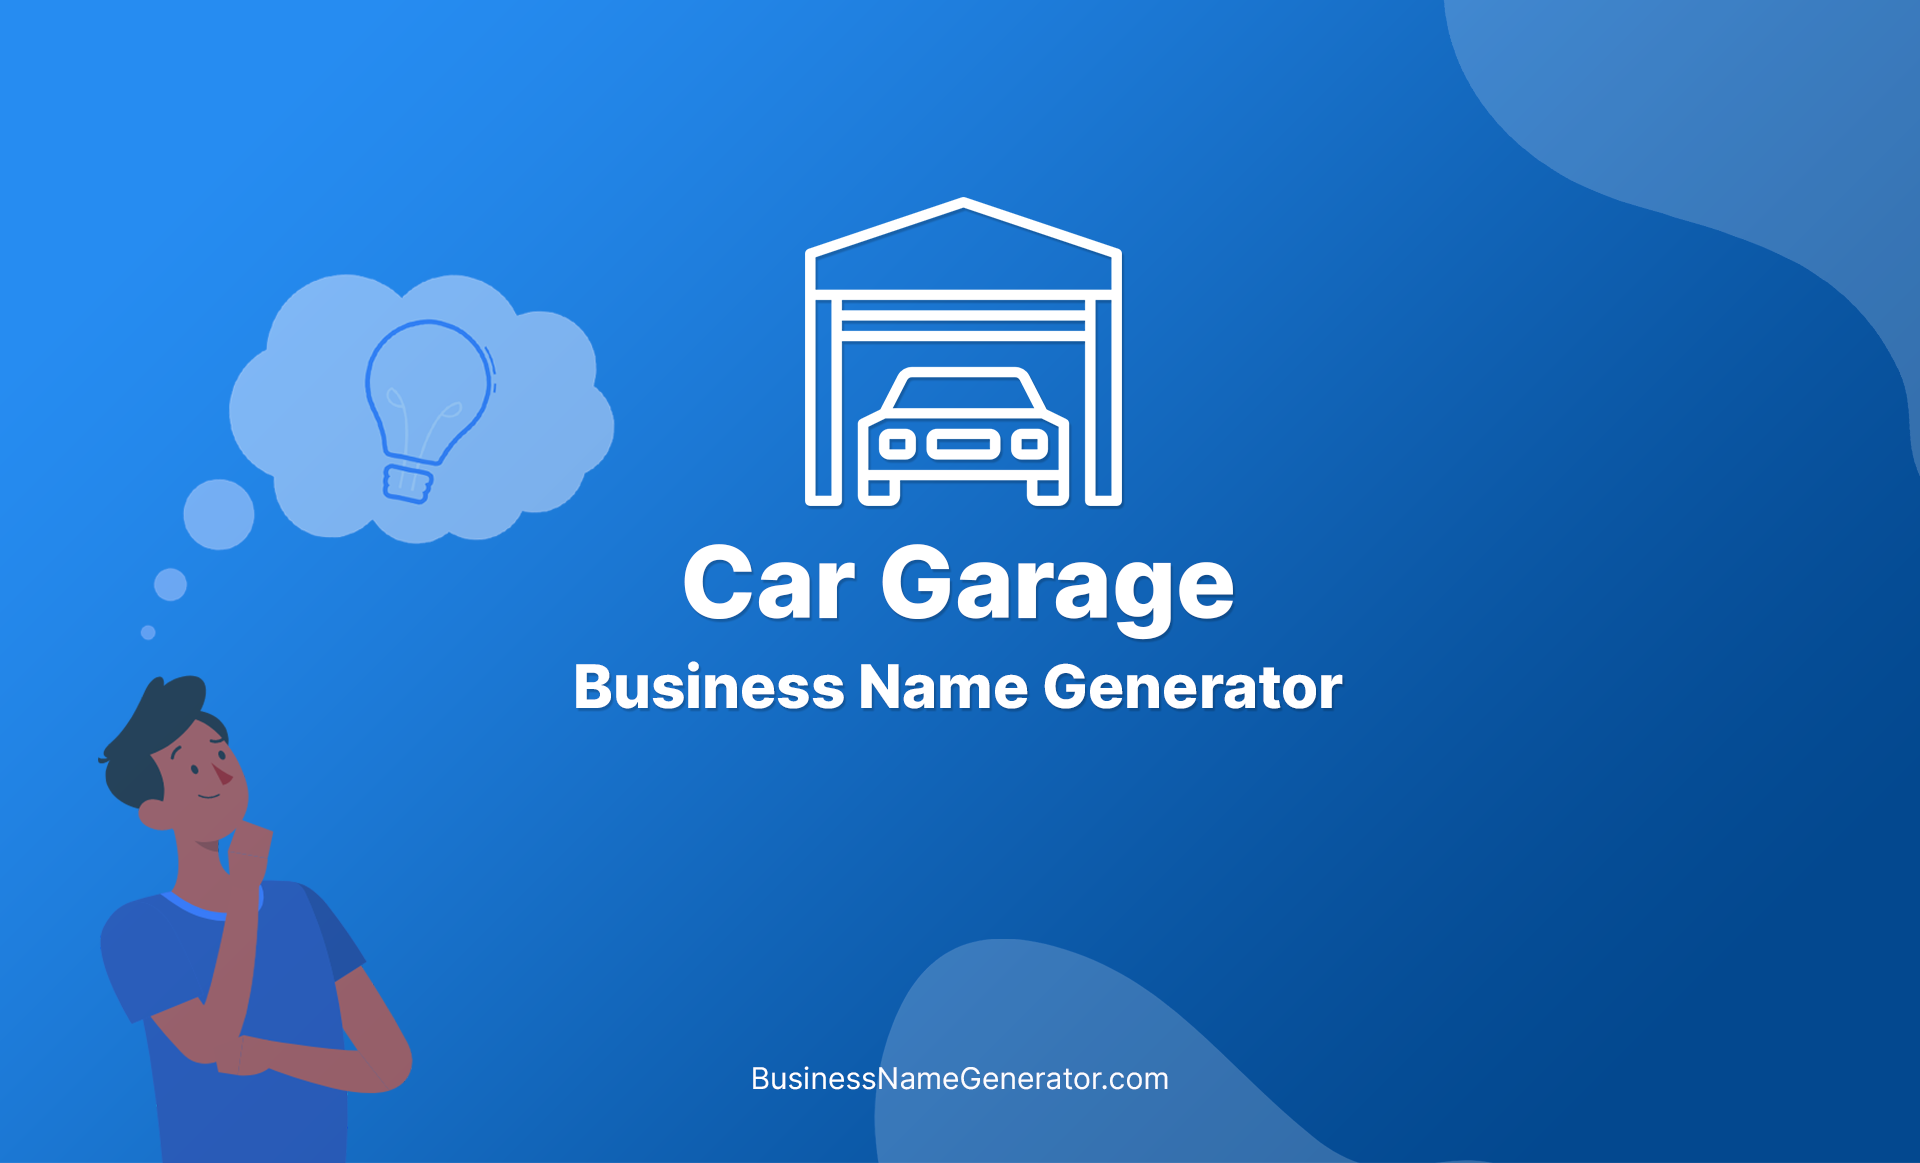 Car Garage Business Name Generator